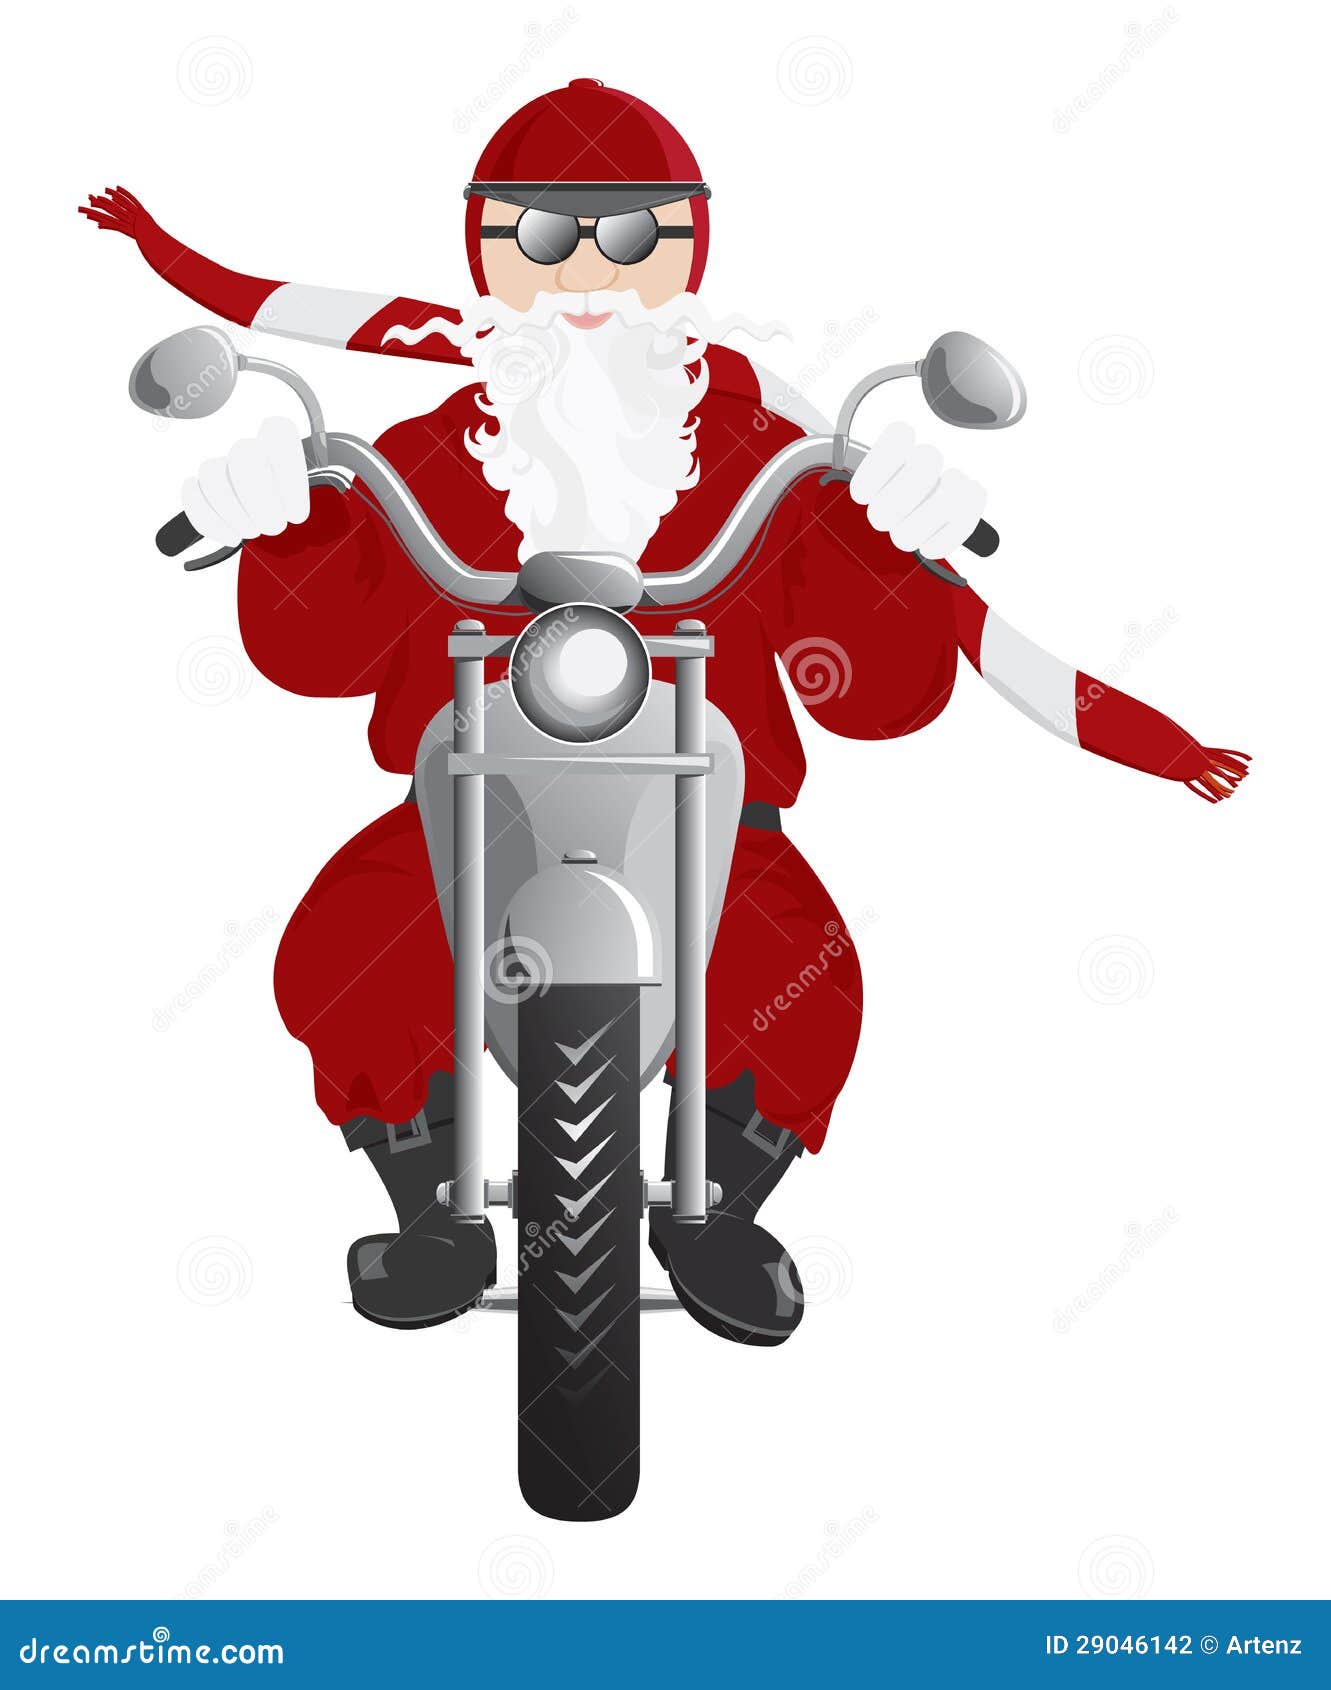 clipart santa on motorcycle - photo #14